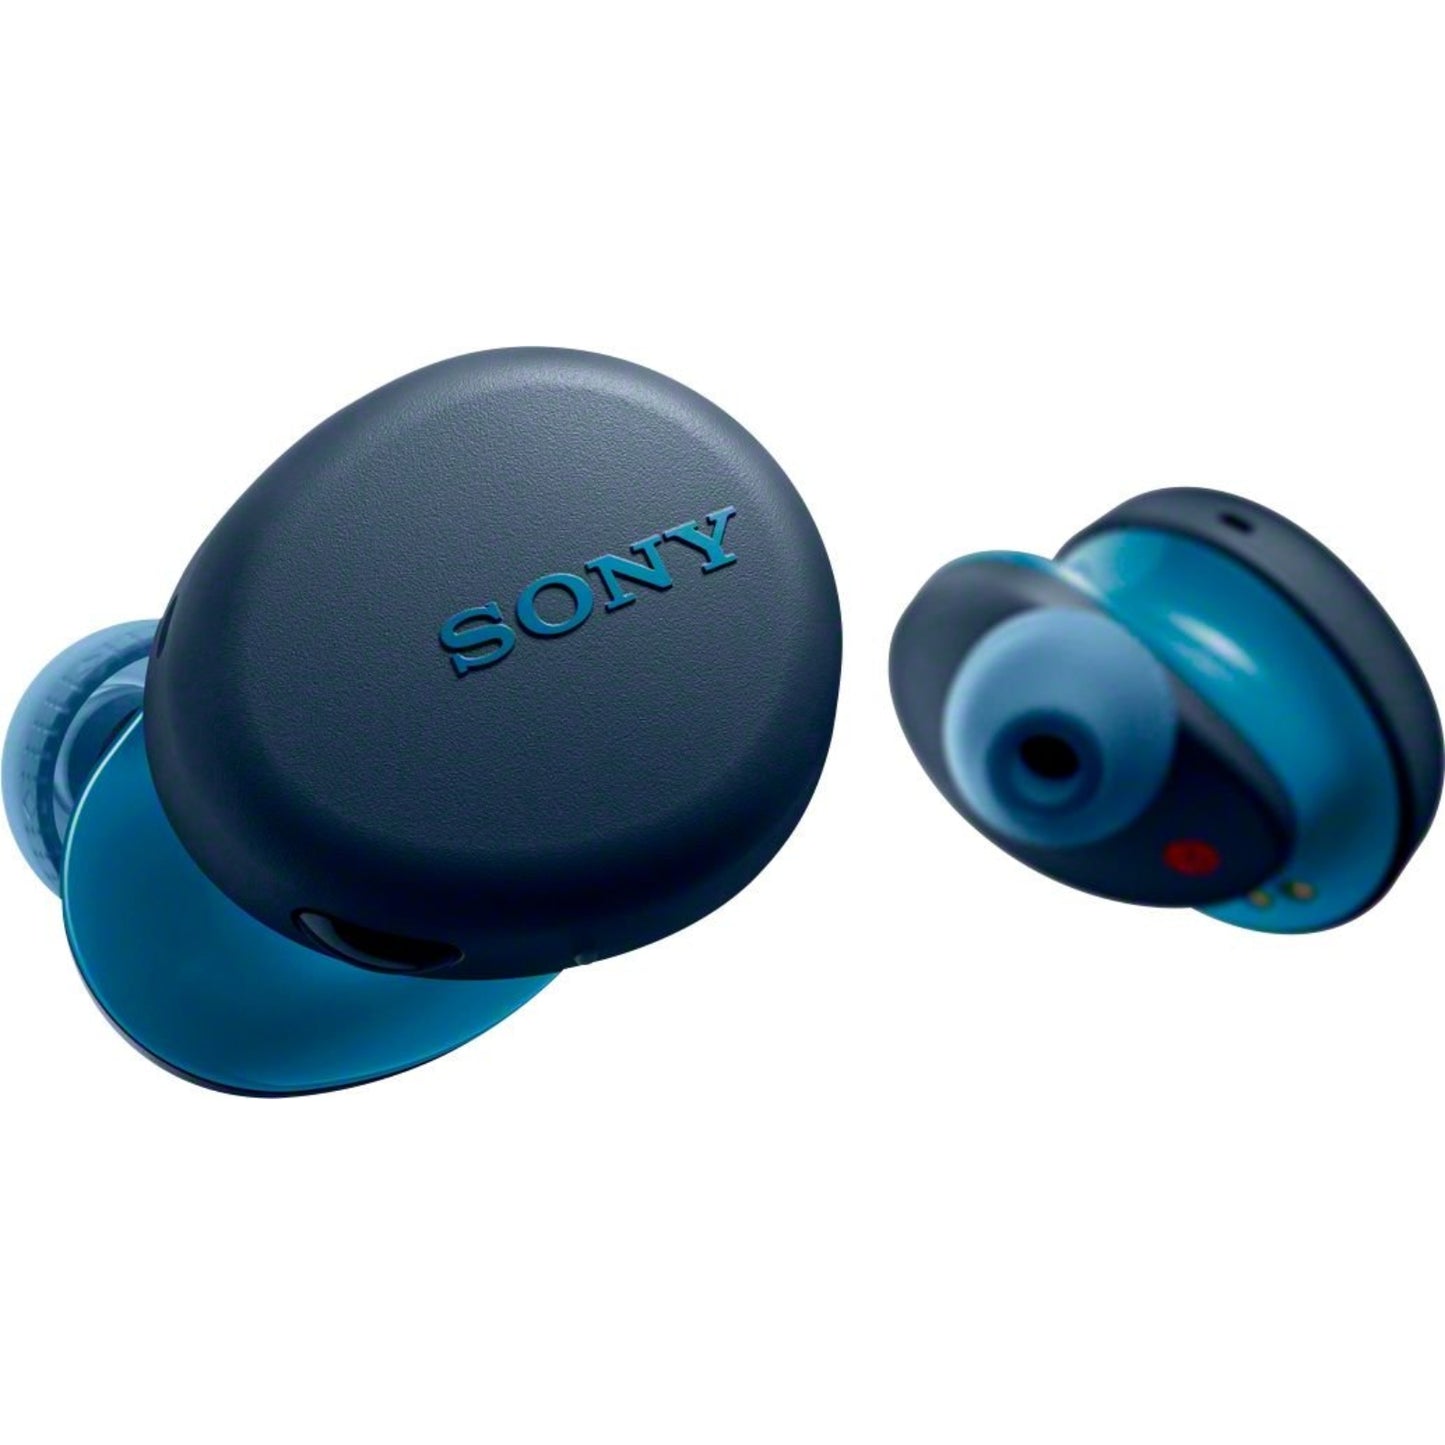 Sony Wf-xb700 Wireless Stereo Headset Blue - MyMobile